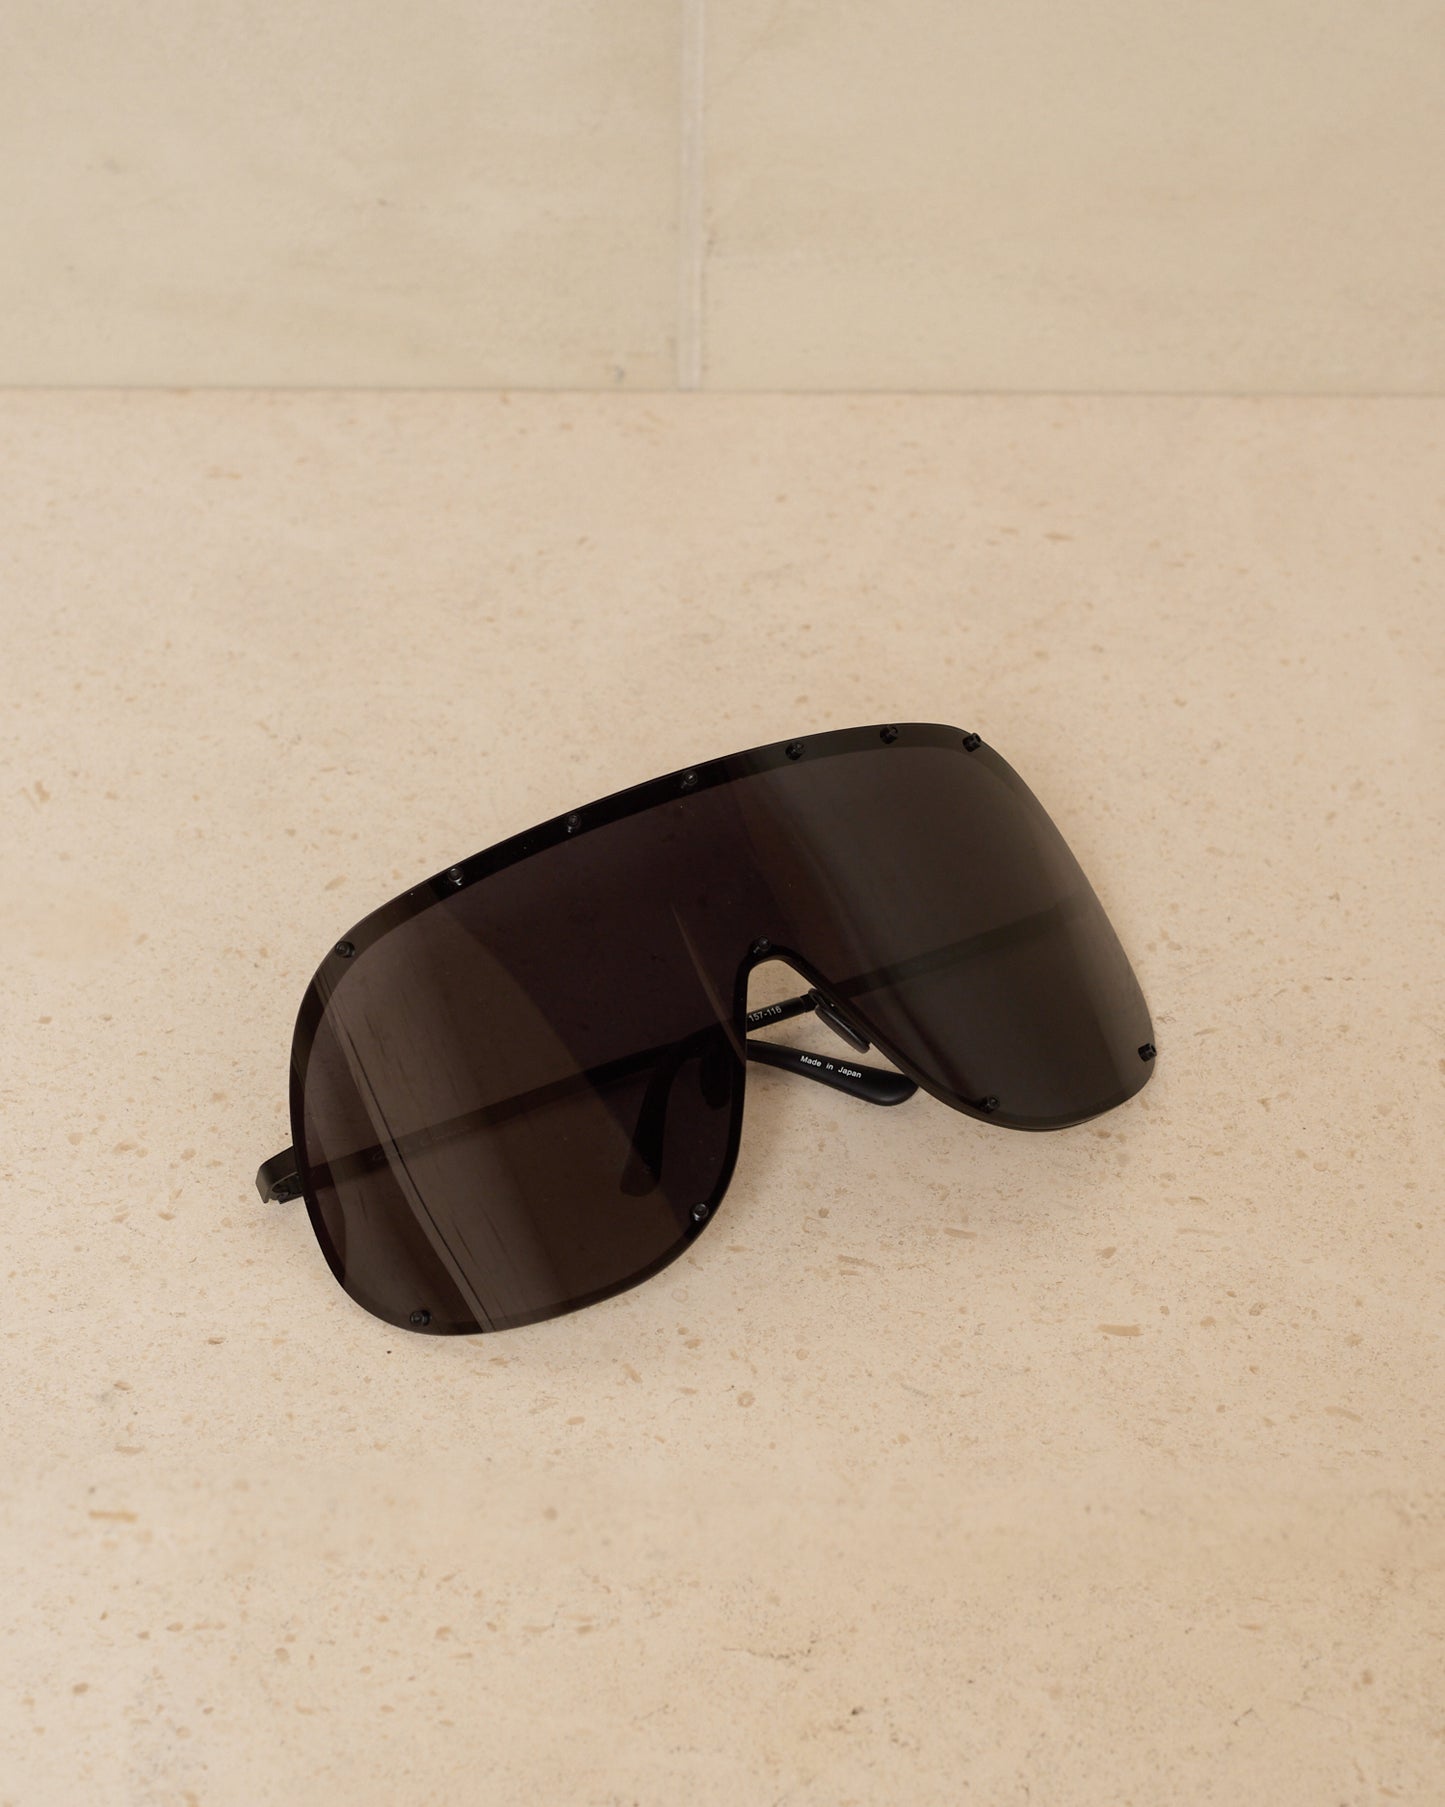 Black Shield Sunglasses